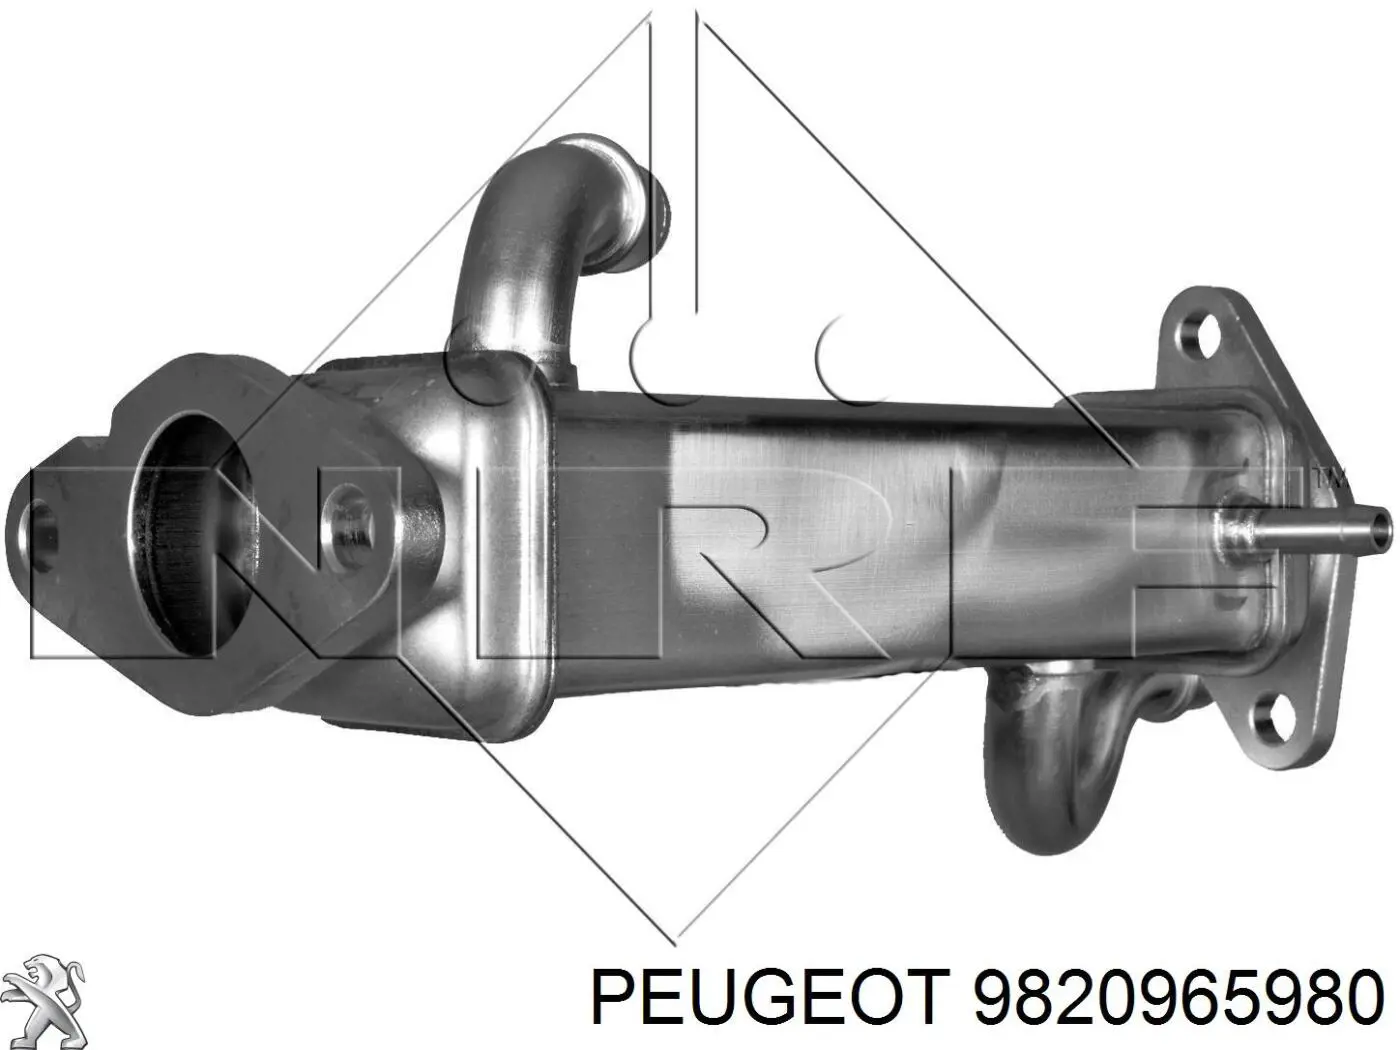 Enfriador EGR de recirculación de gases de escape 9820965980 Peugeot/Citroen